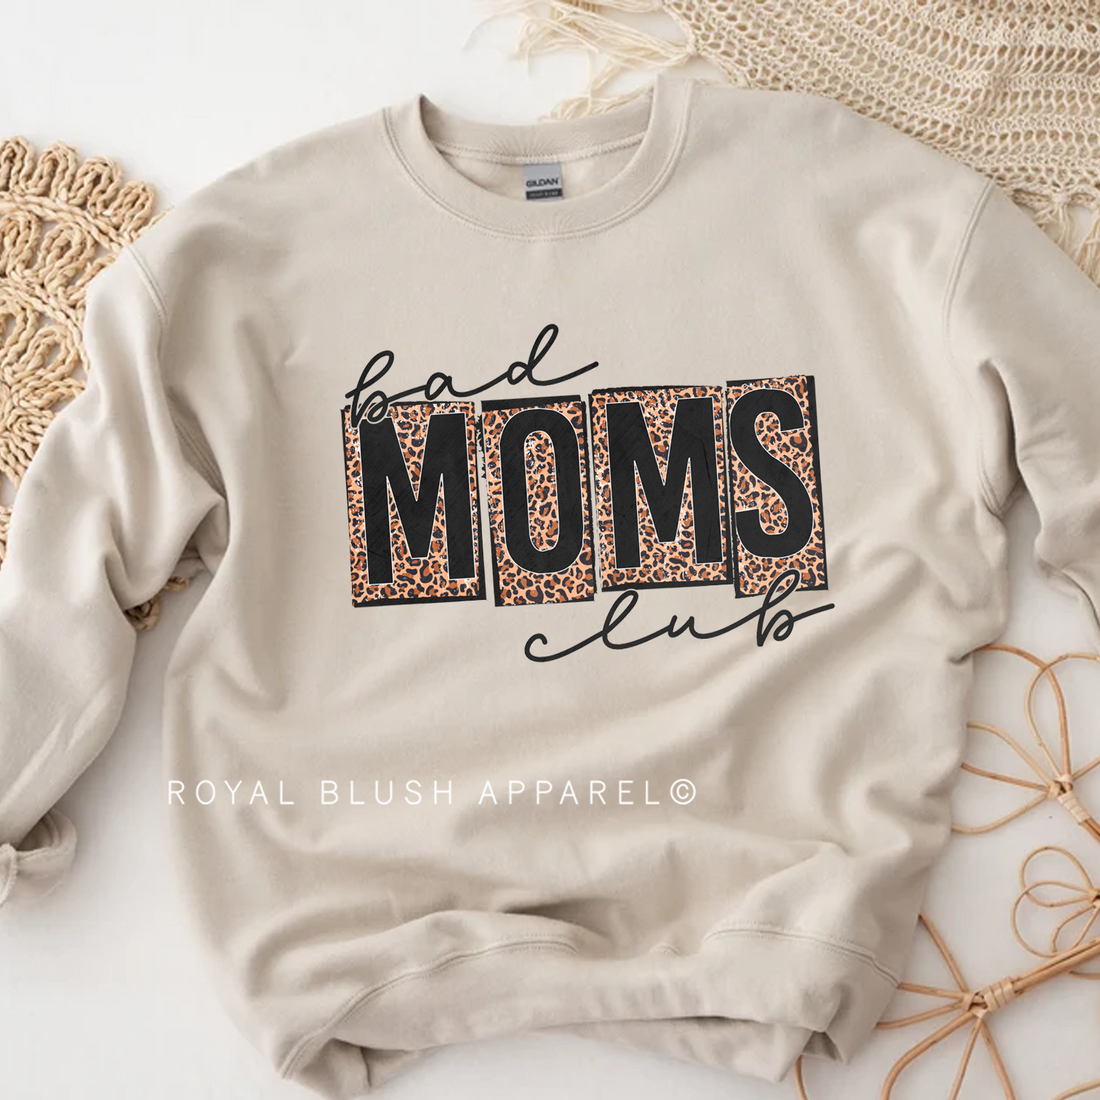 Bad Moms Club Sweatshirt